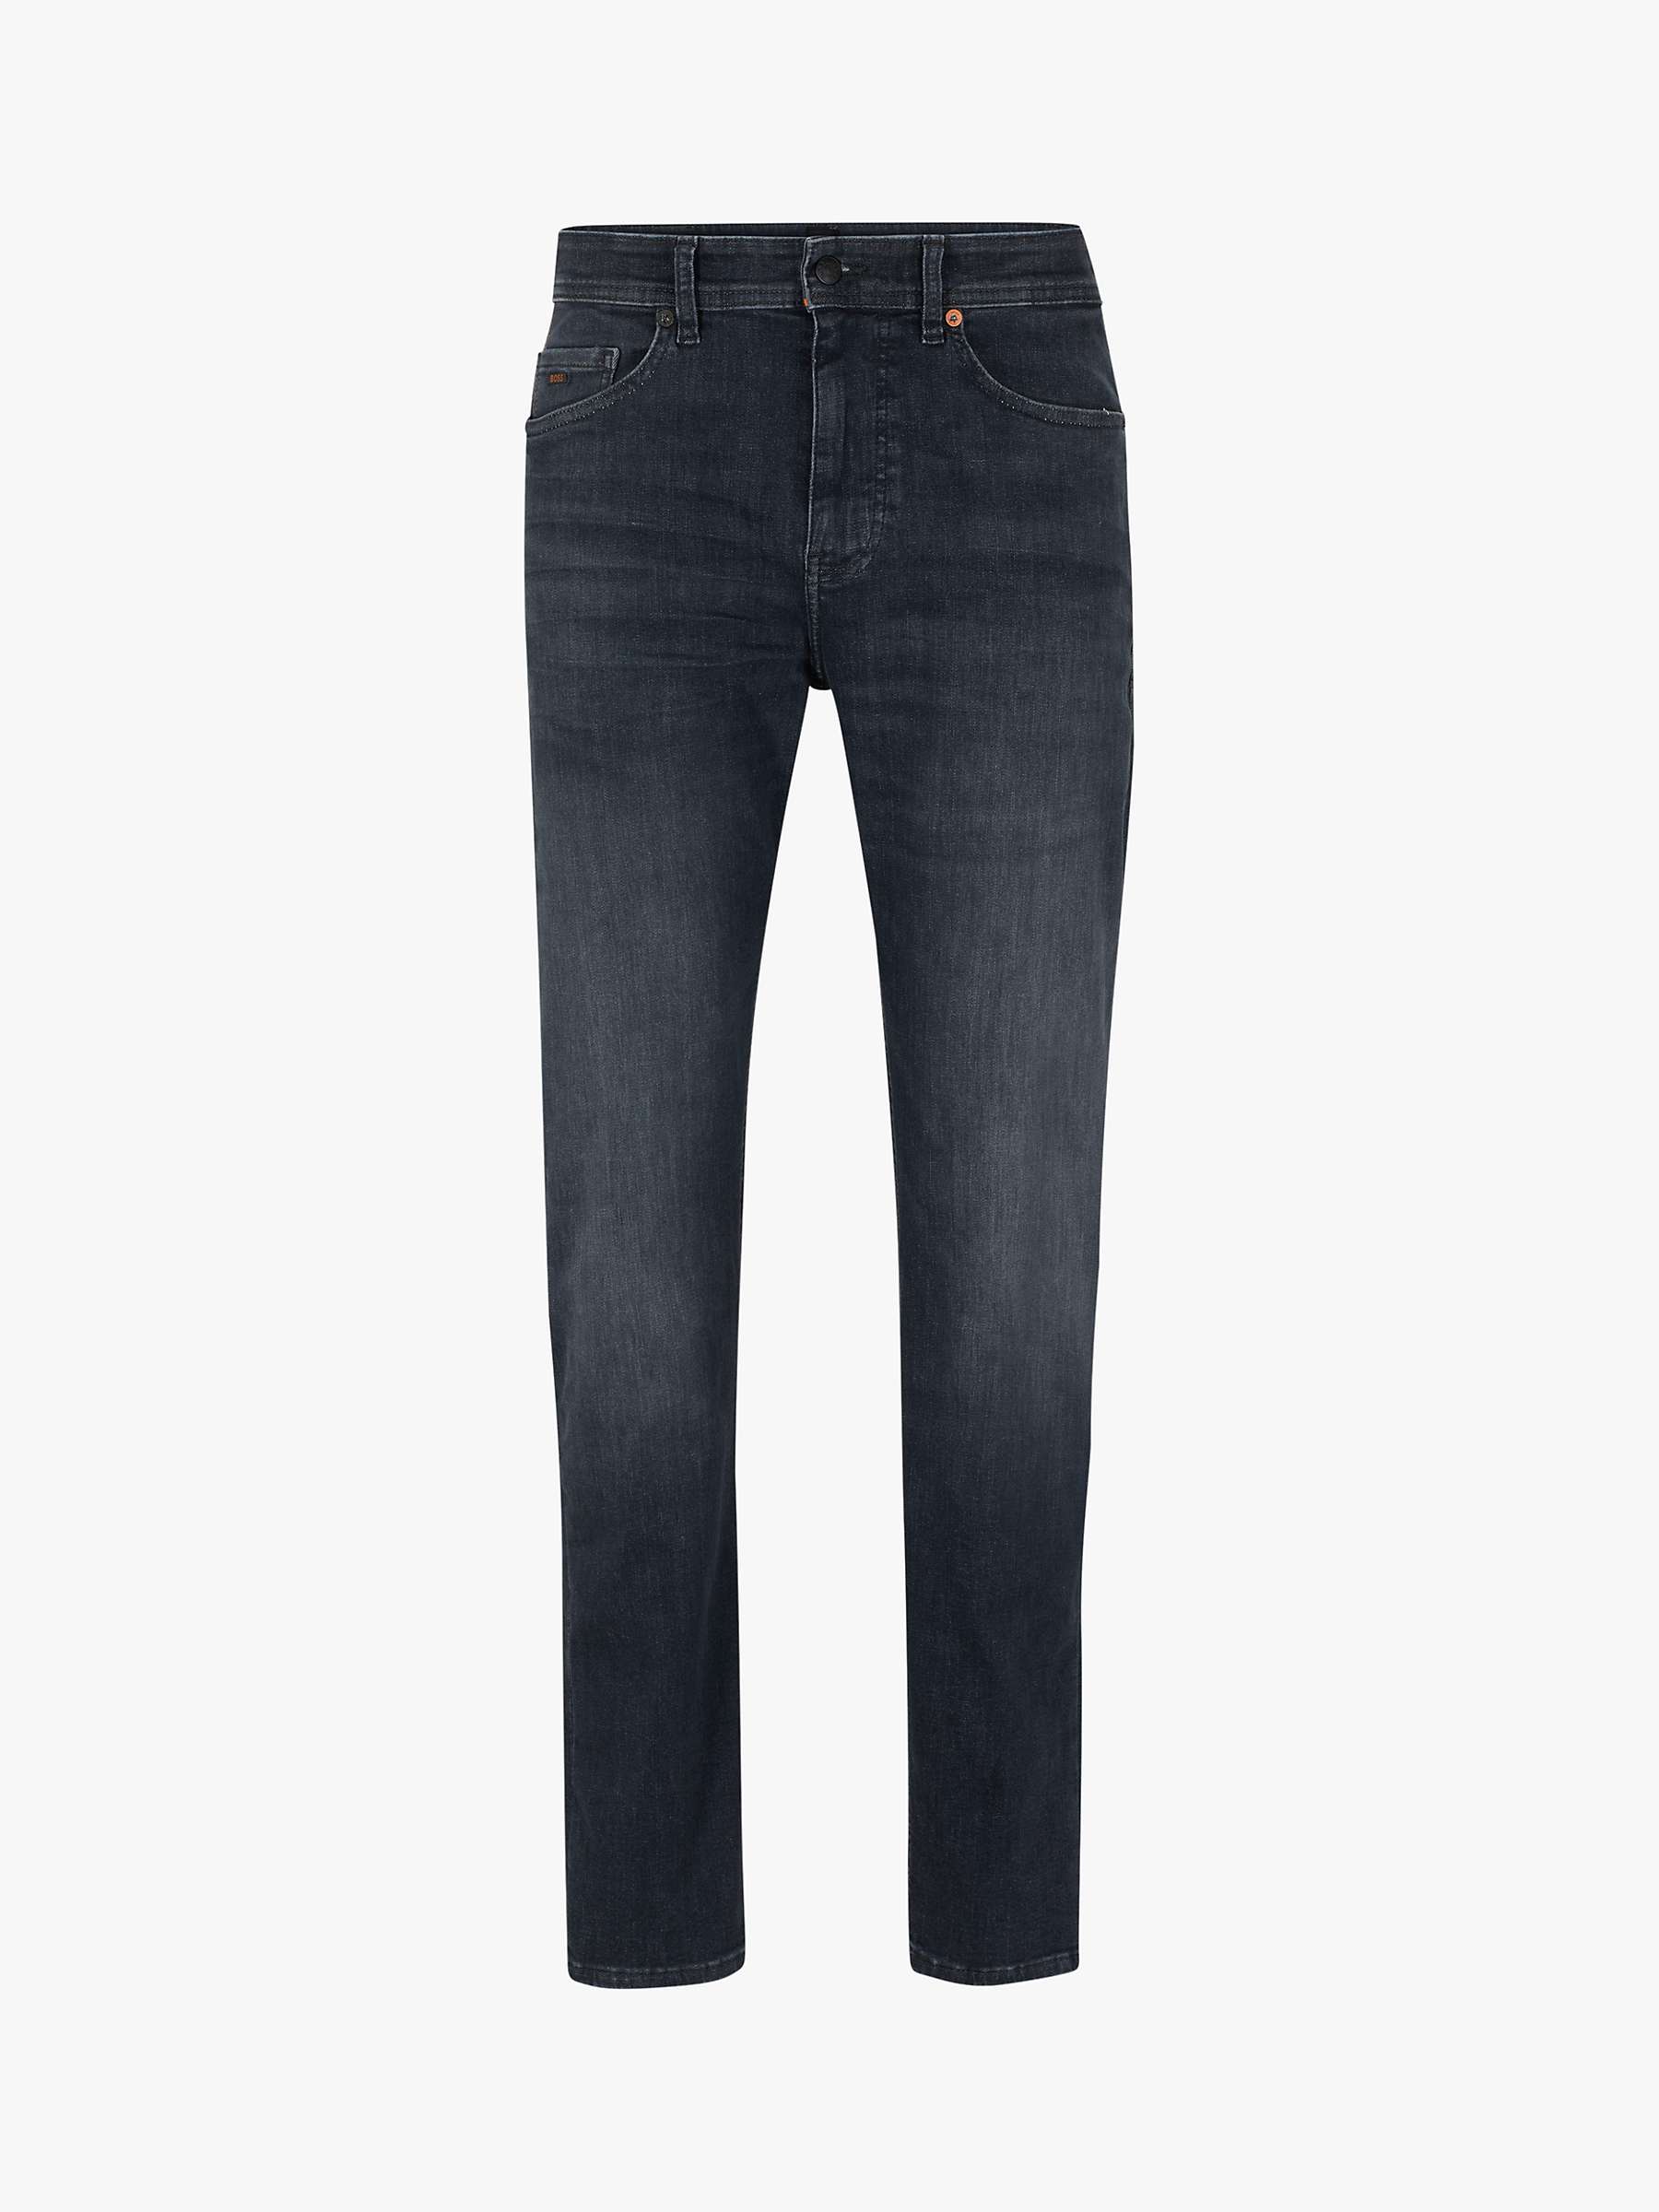 BOSS Tapered Fit Jeans, Medium Grey at John Lewis & Partners